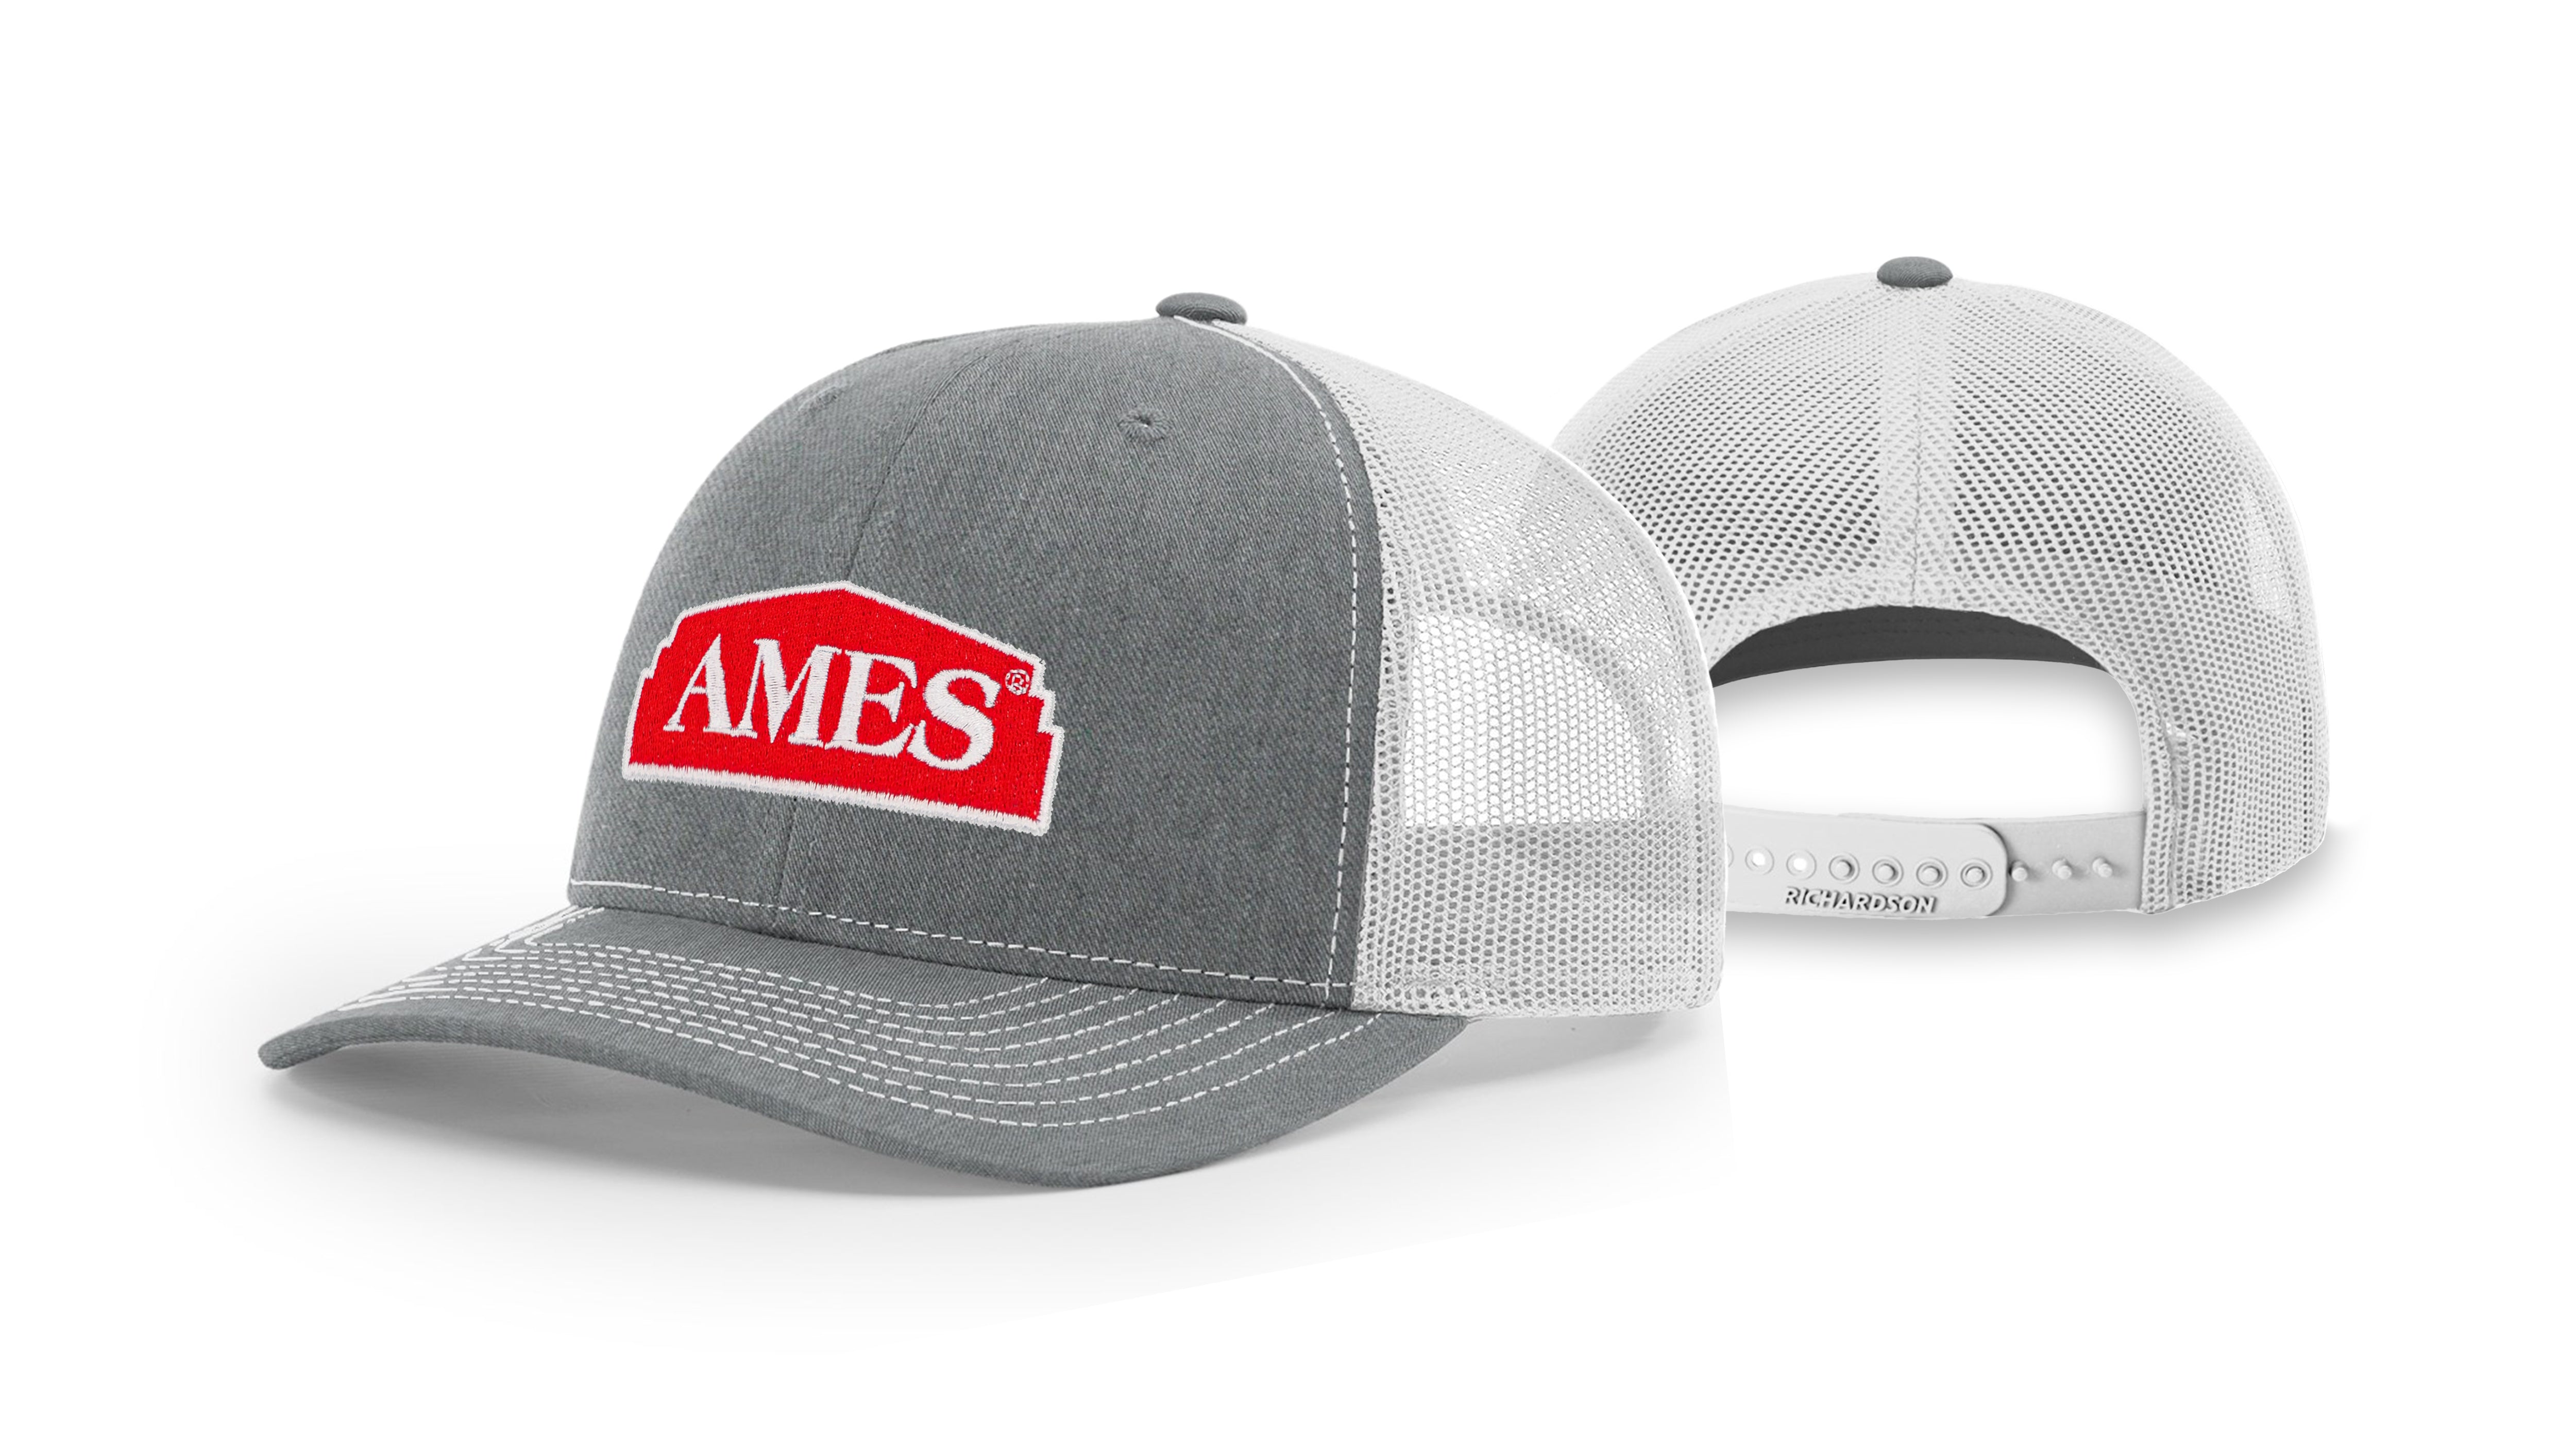 Custom New Era Hats & Apparel  Company Logo Embroidered New Era Caps